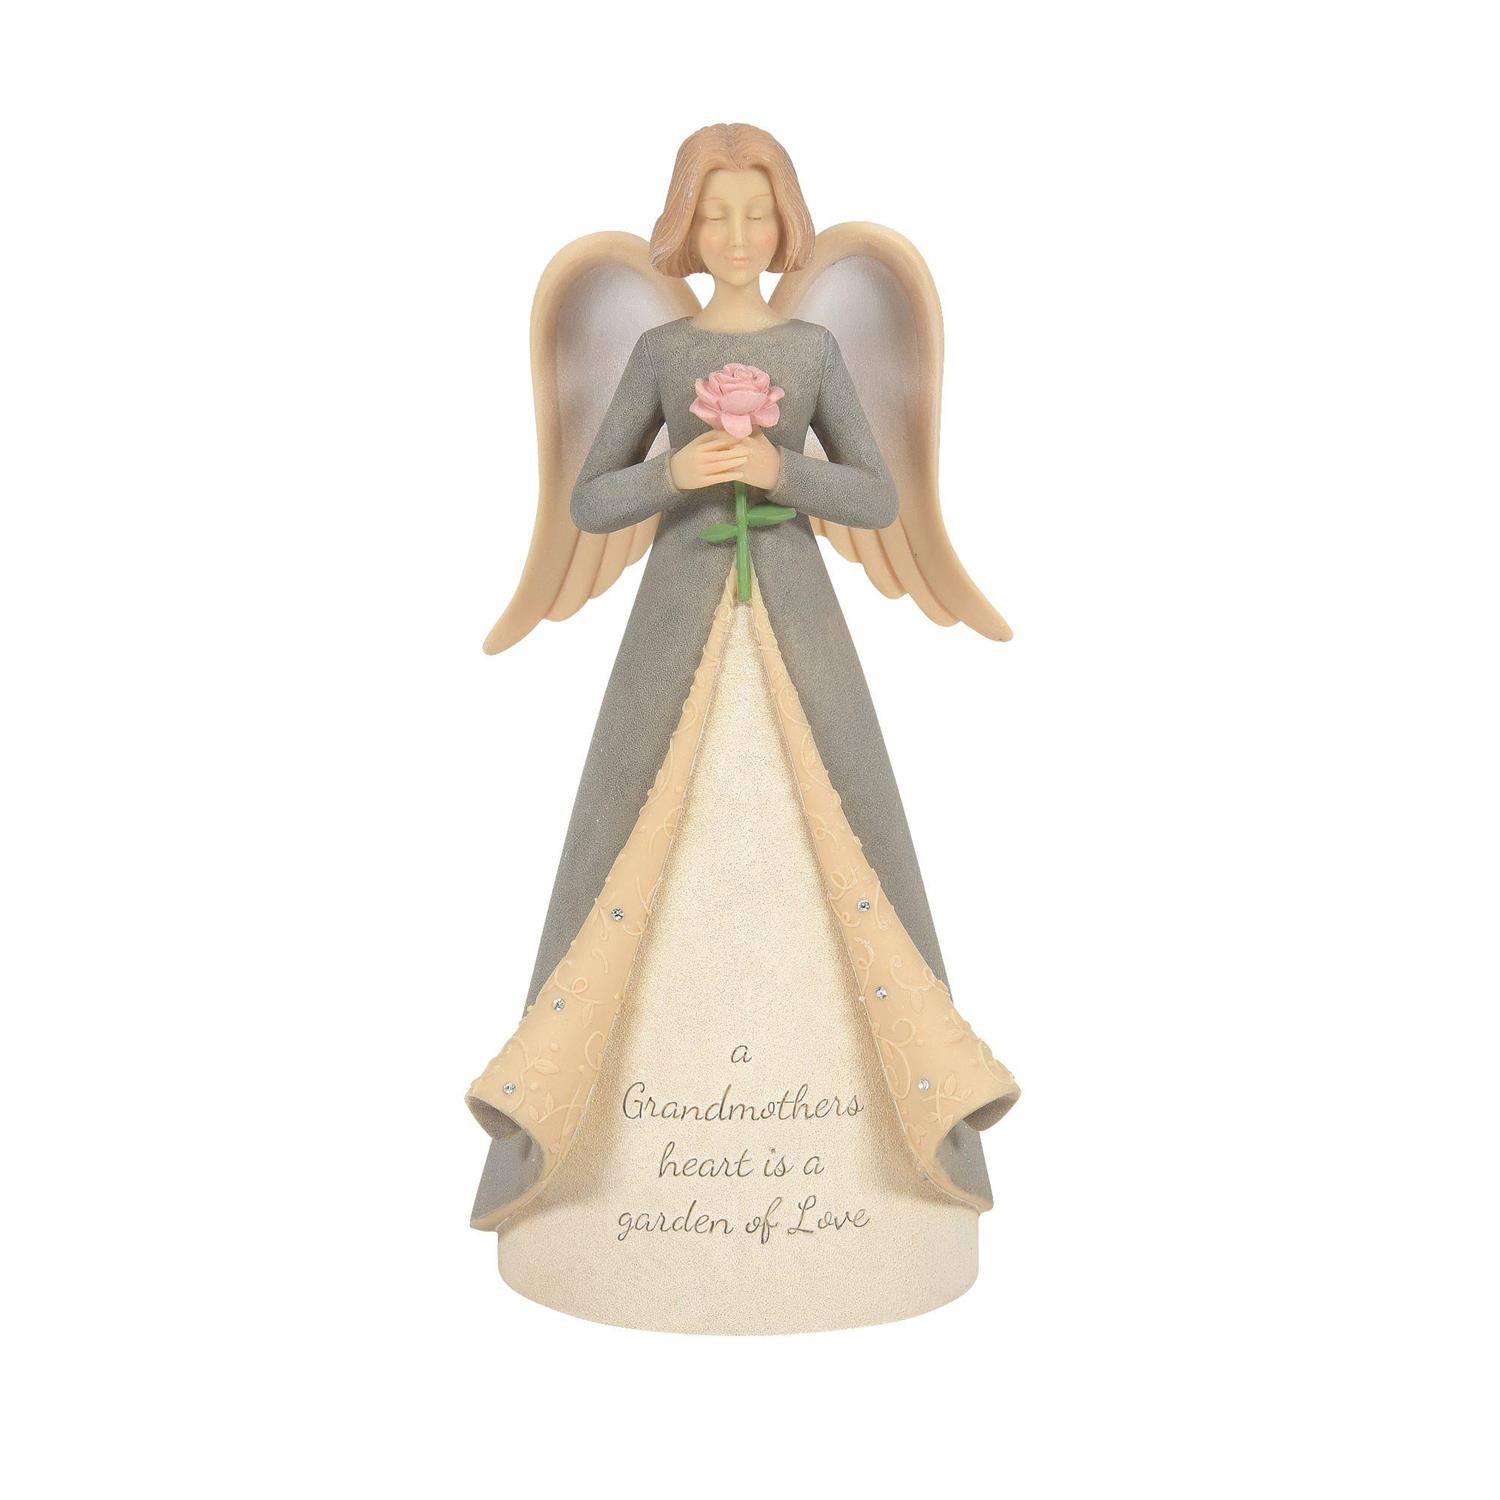 Foundations Grandmother Angel figurine from Enesco